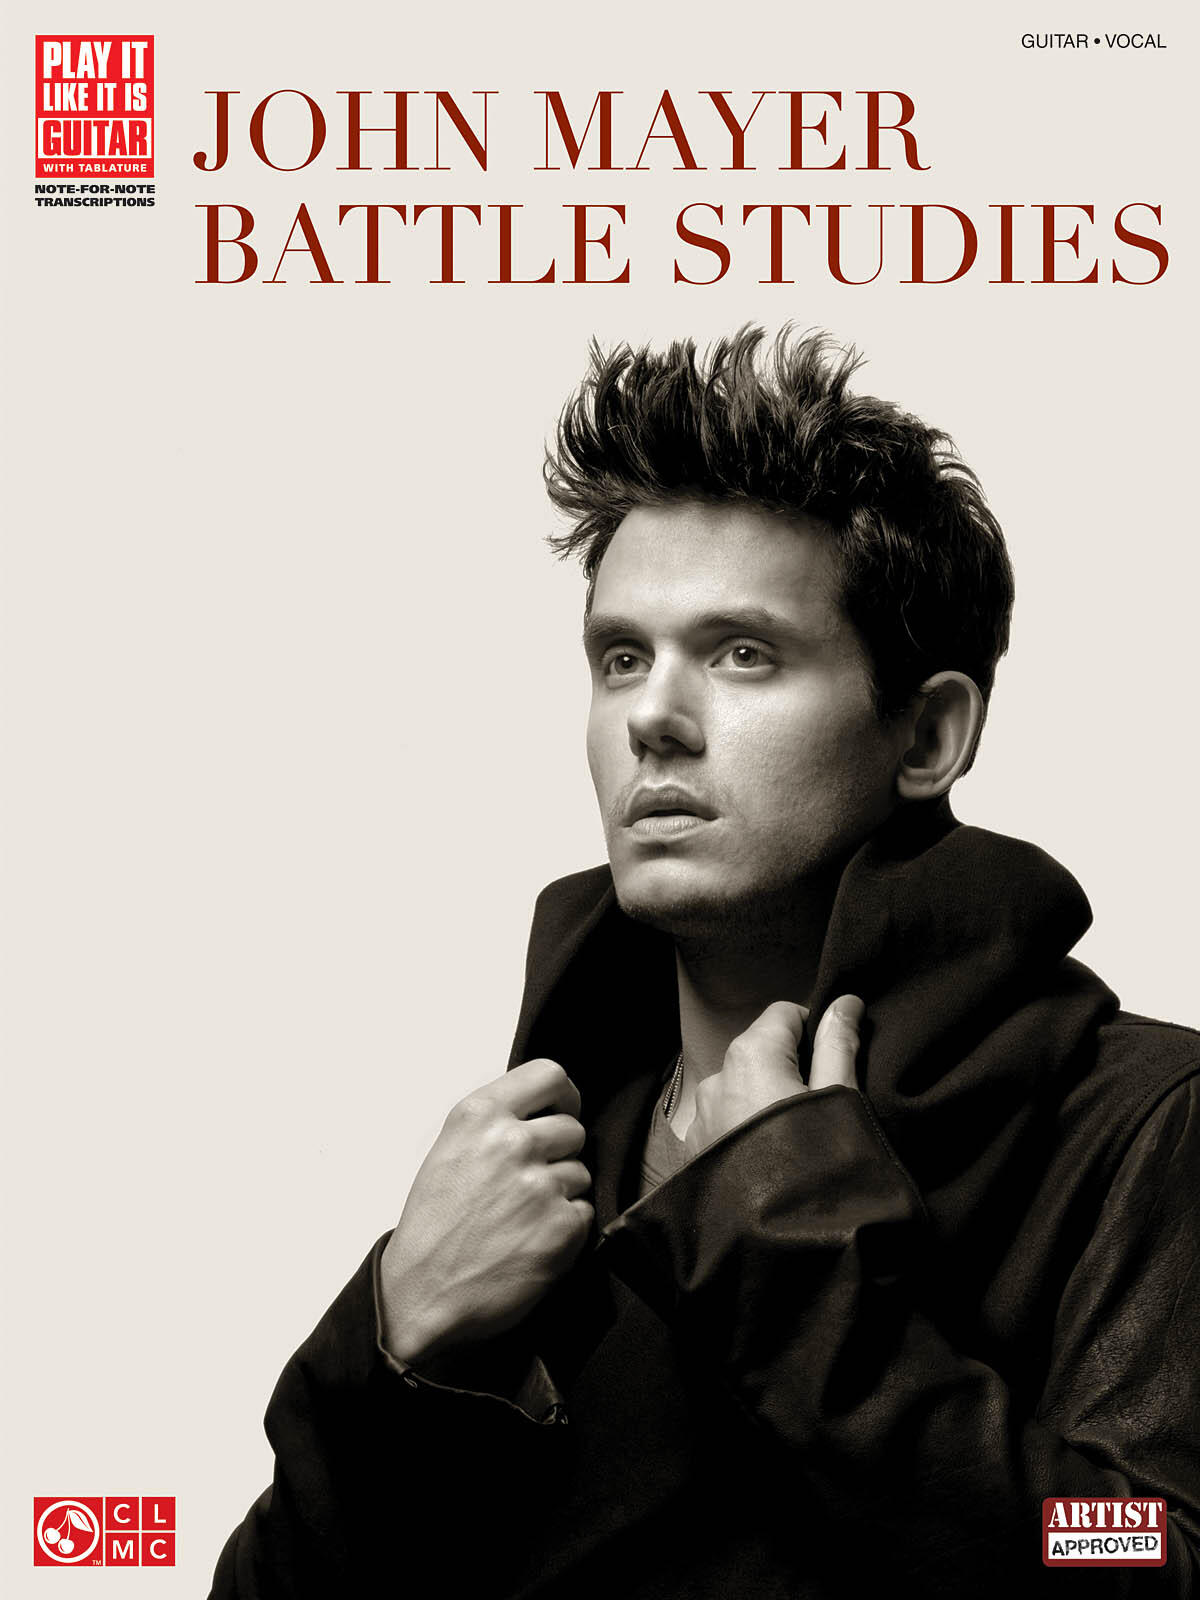 John Mayer - Battle Studies : photo 1